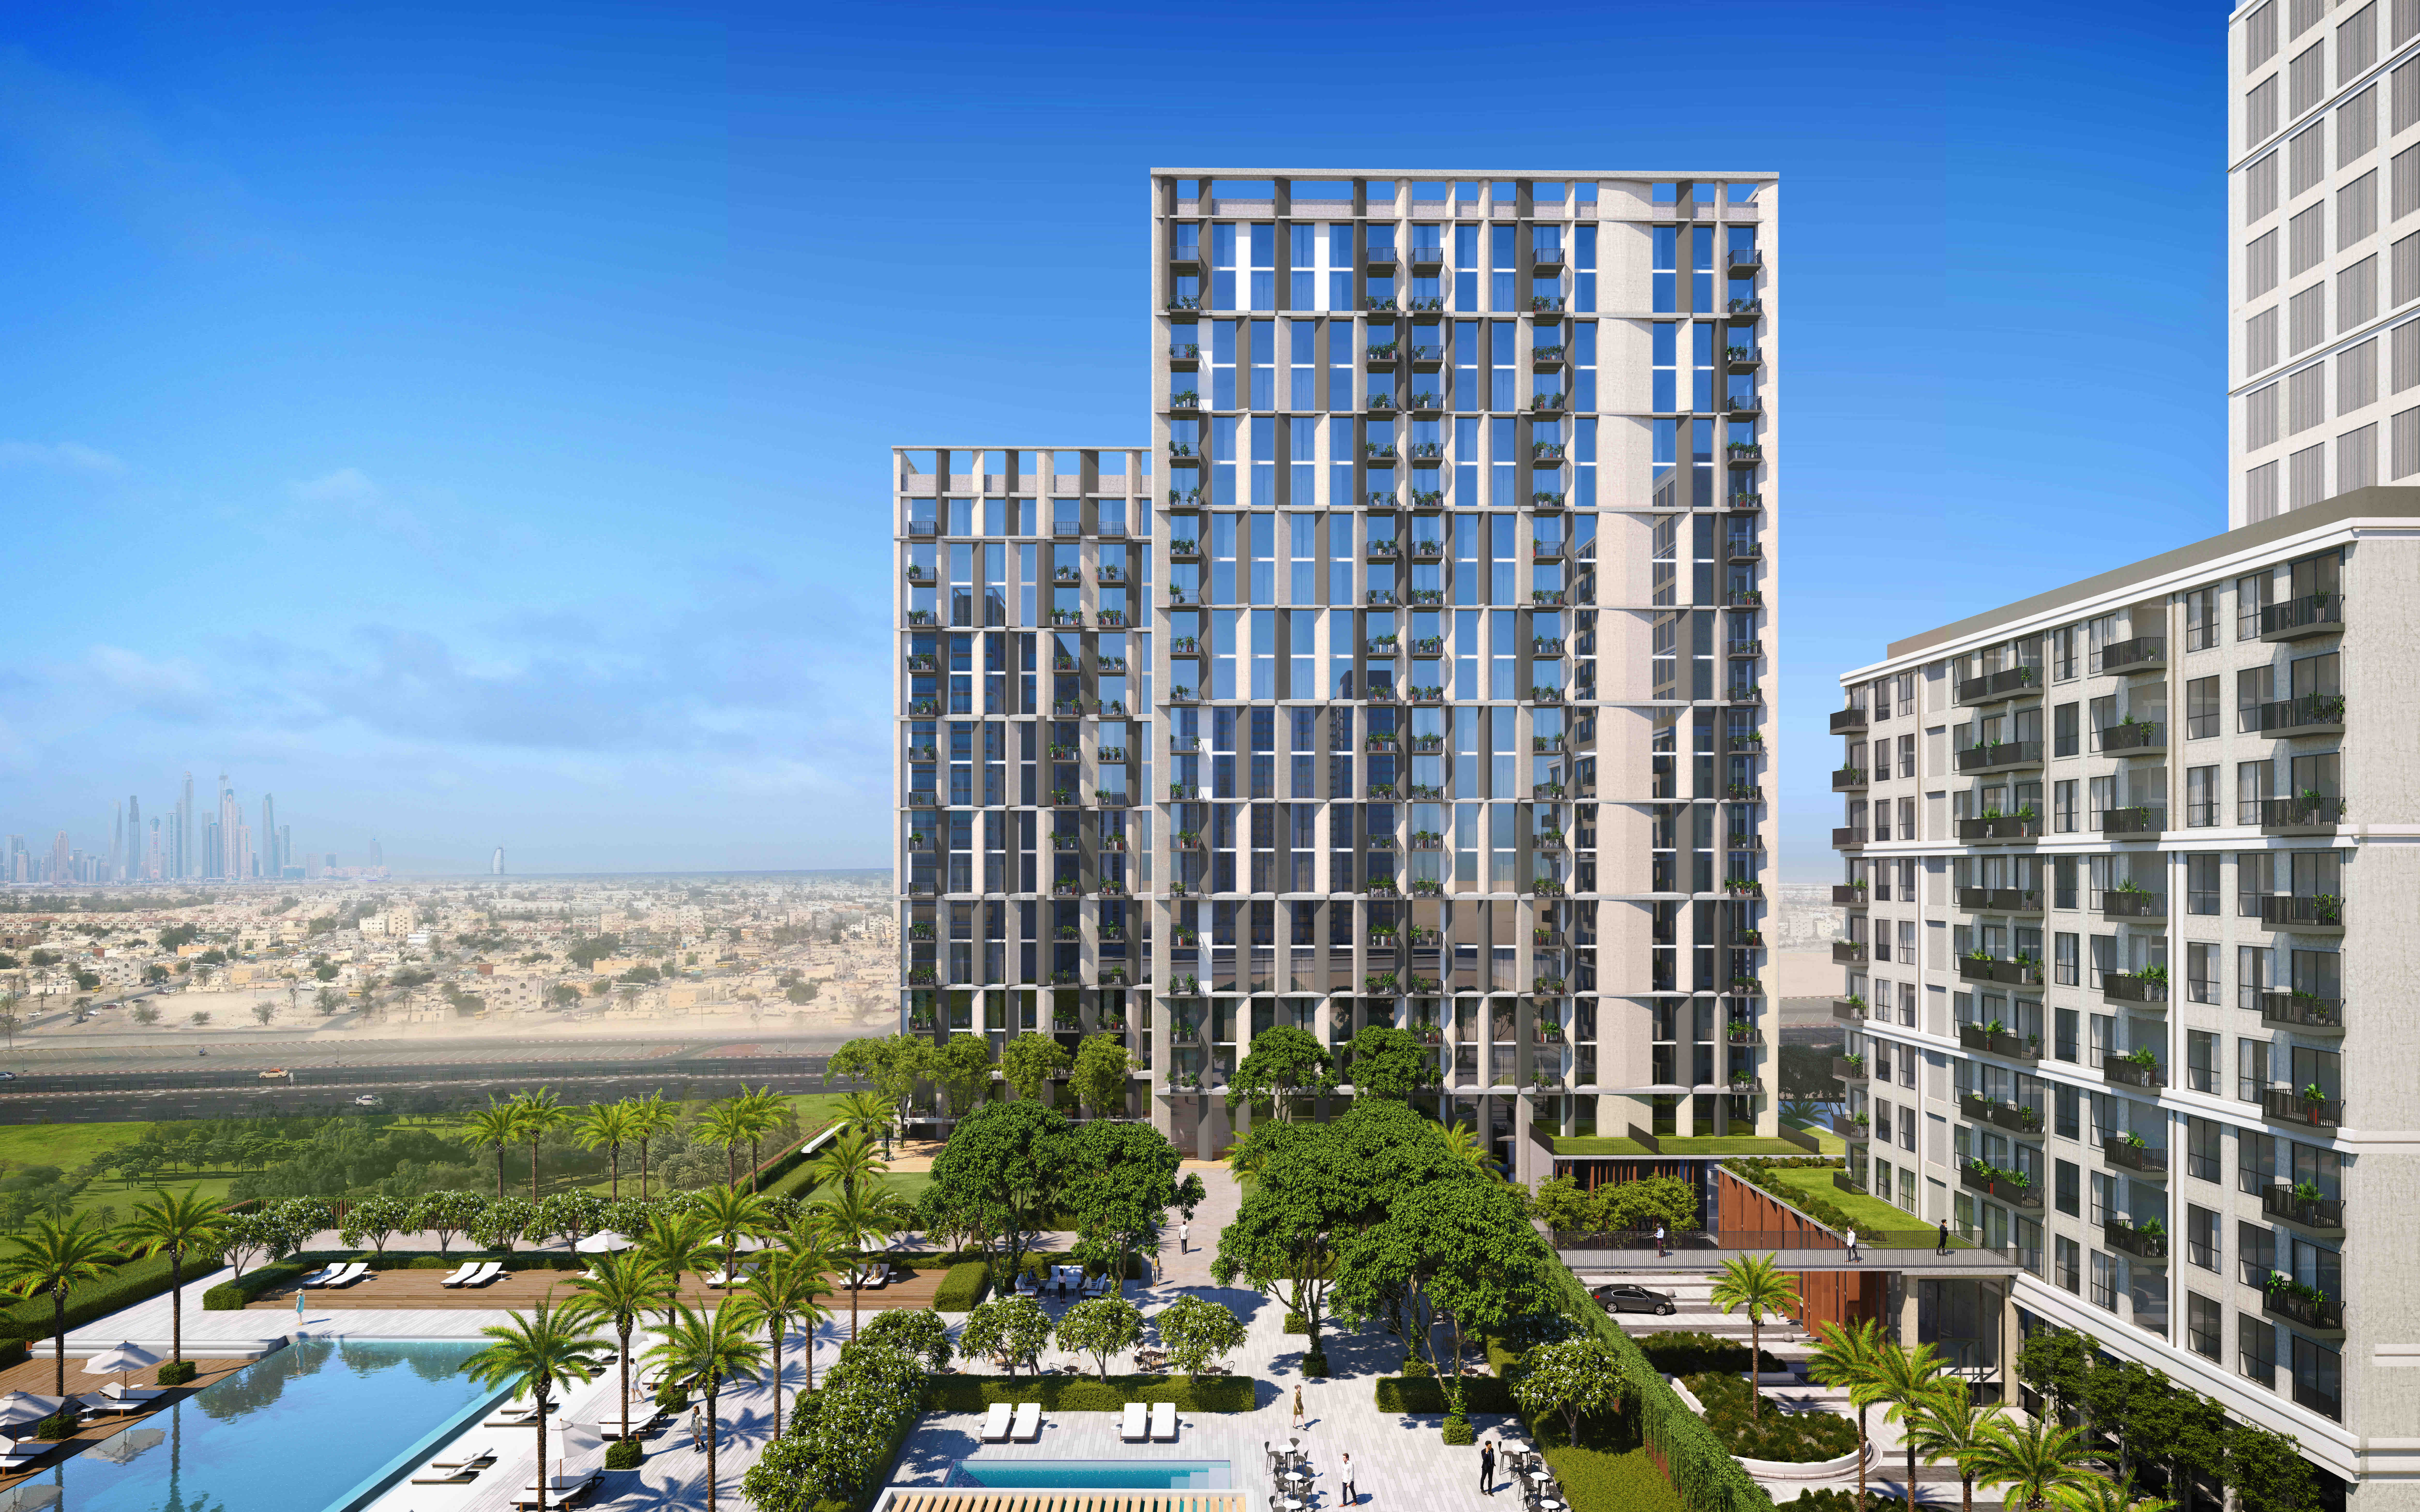 Dubai Hills Estate - Collective 2.0 Building & Pool Area View